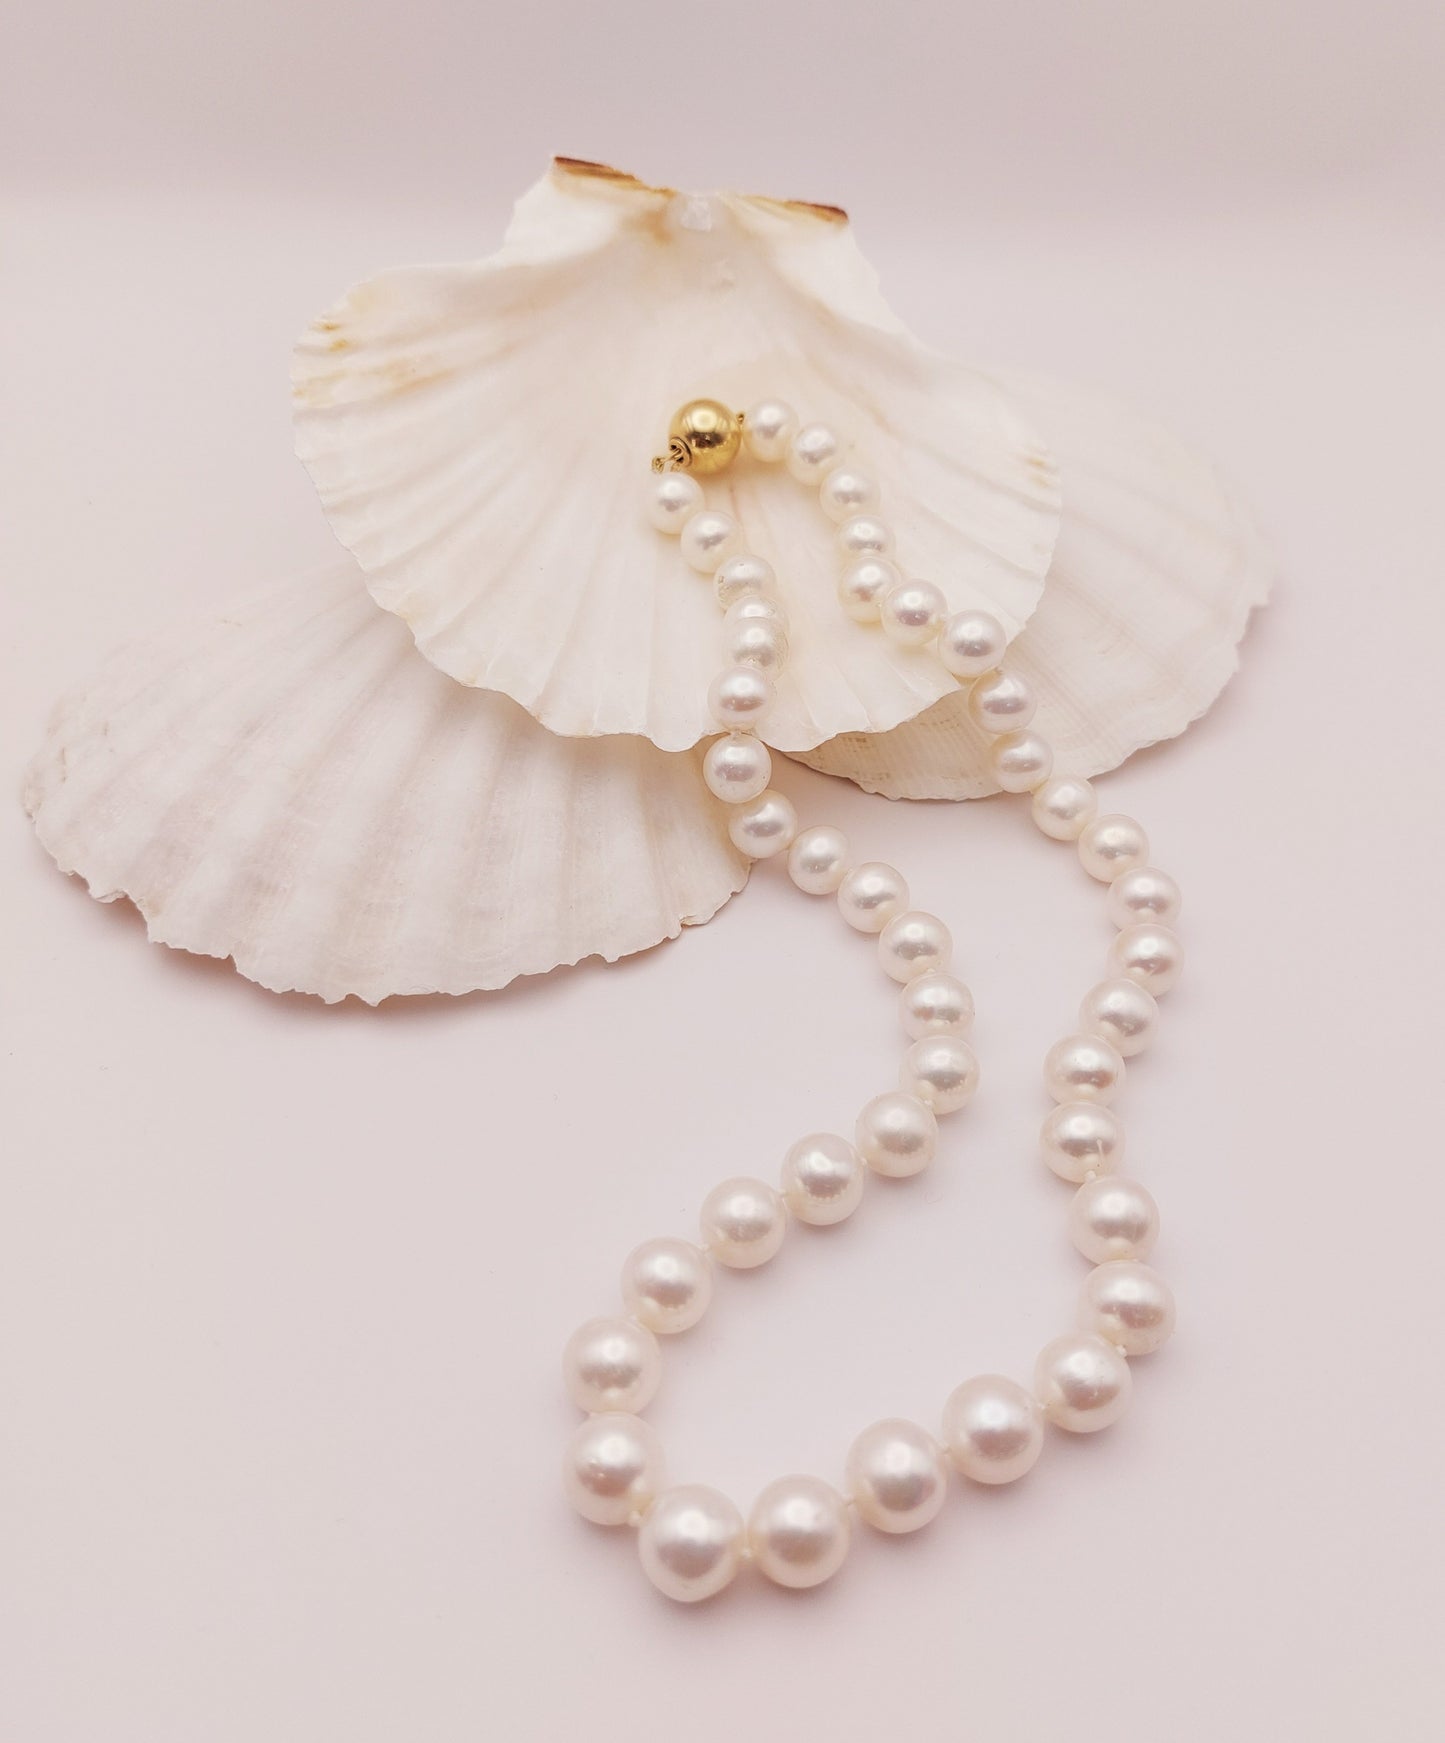 Queen of Pearls Necklace